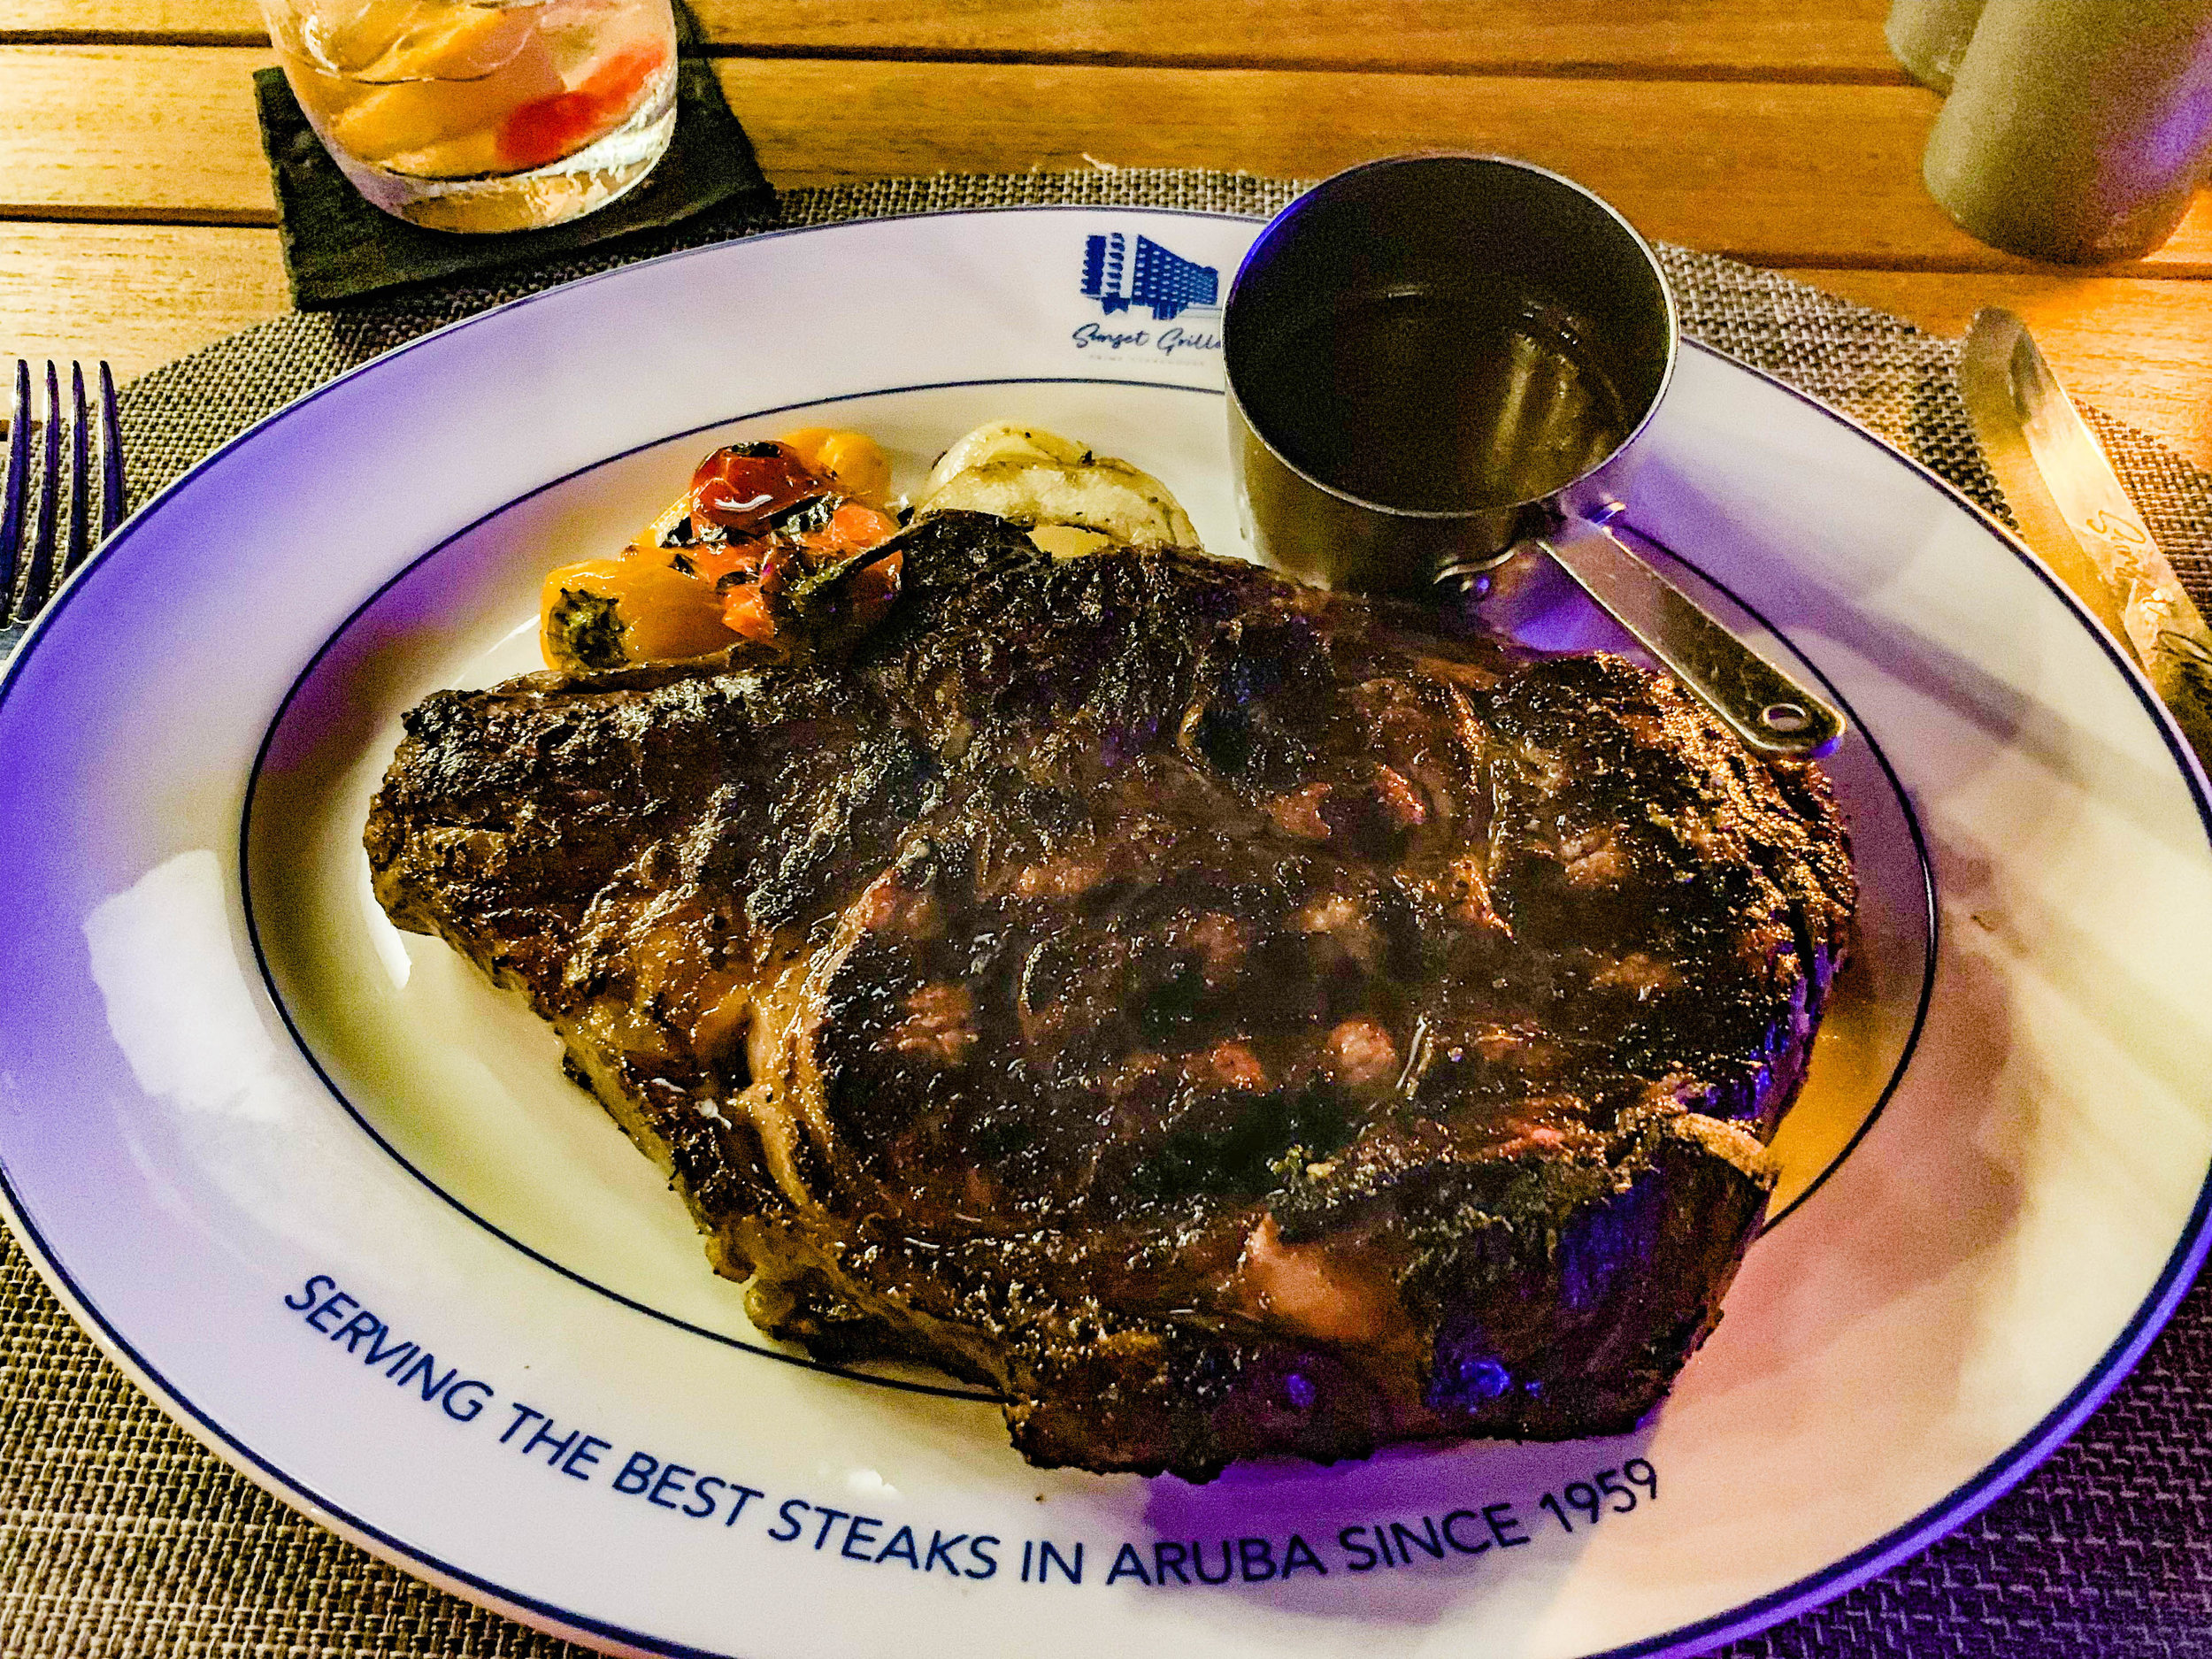 Sunset Grille Hilton Aruba - Steak